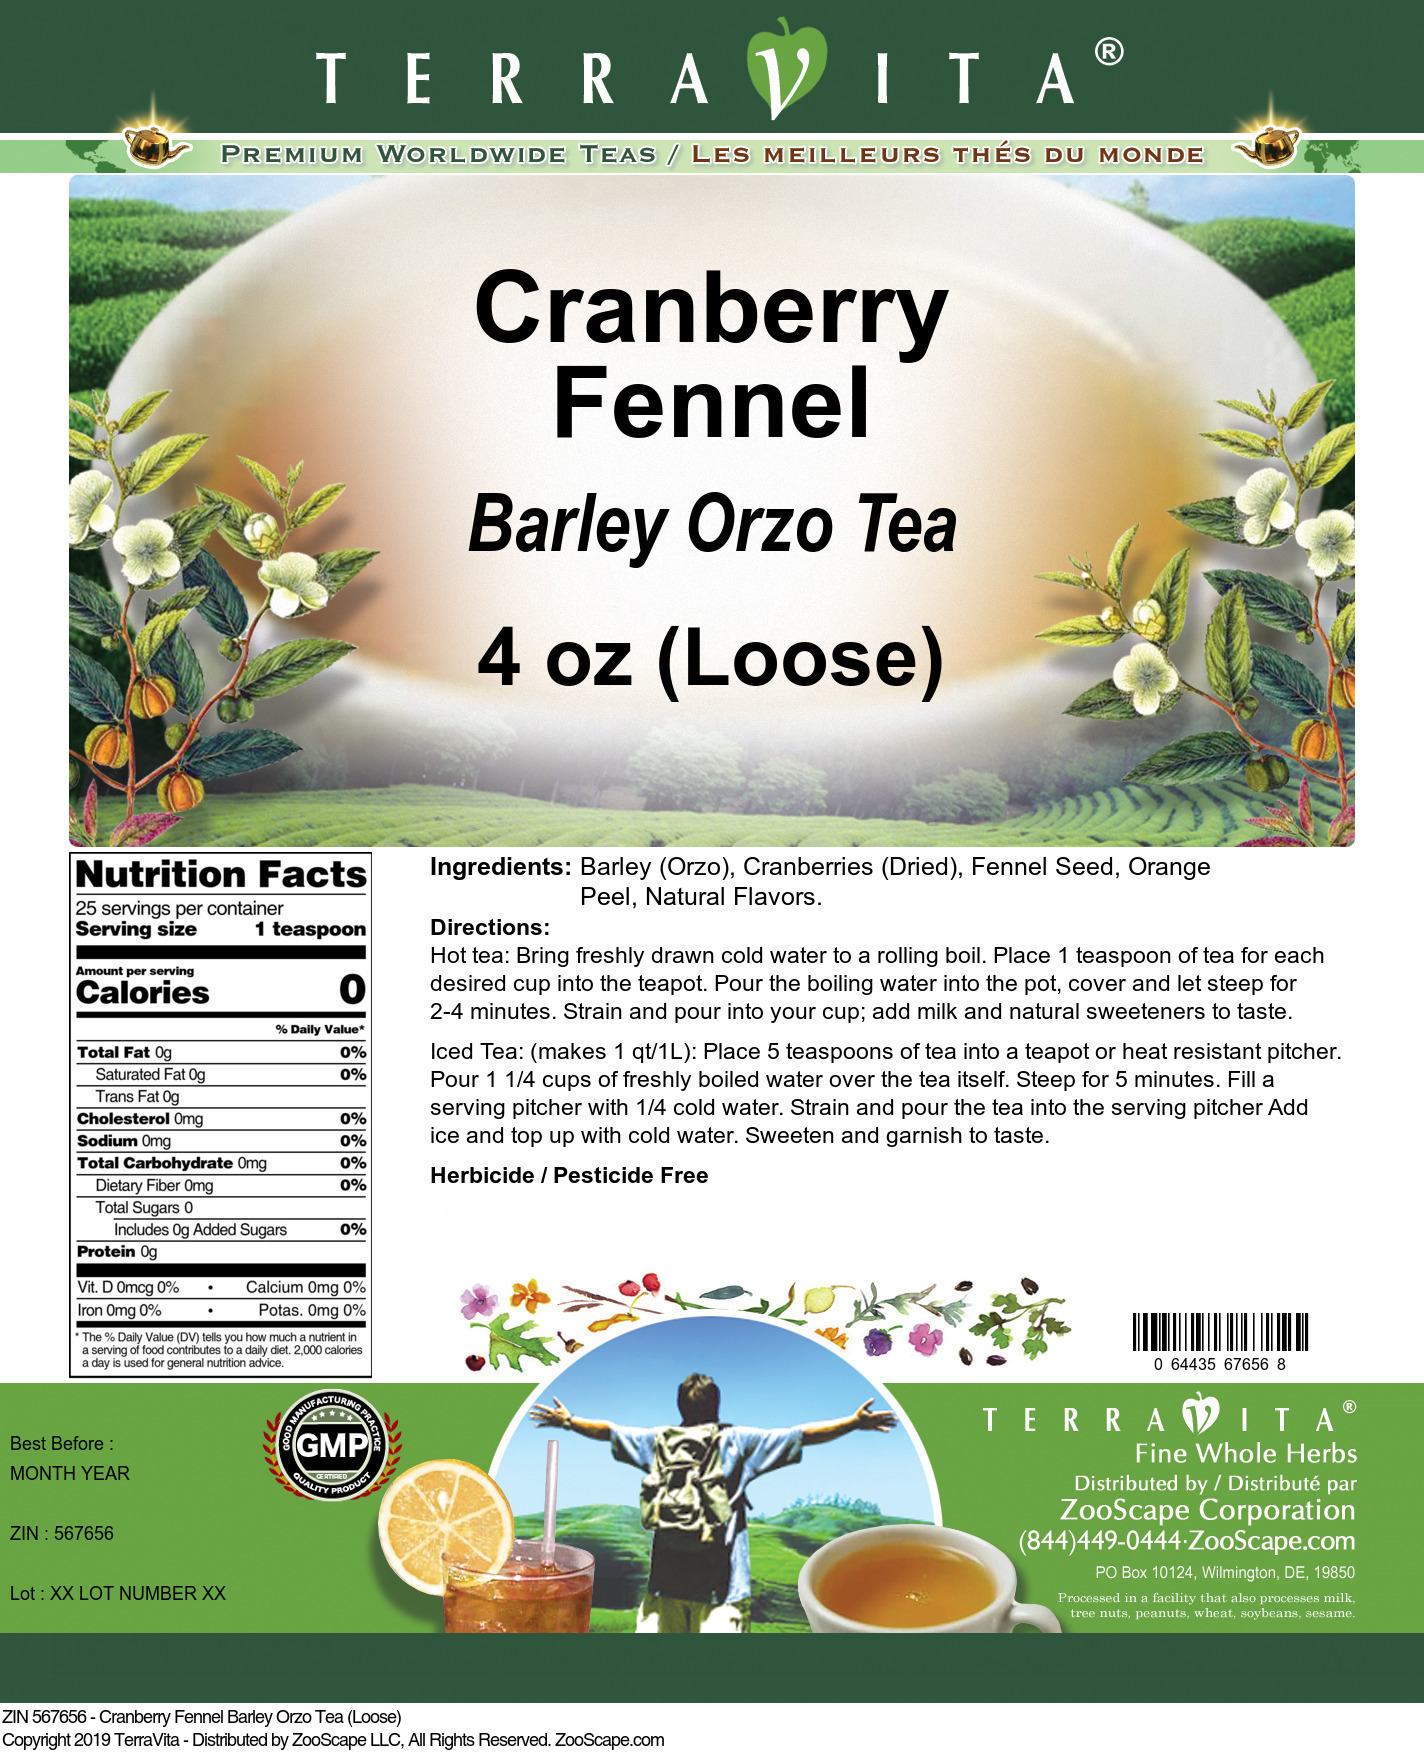 Cranberry Fennel Barley Orzo Tea (Loose) - Label